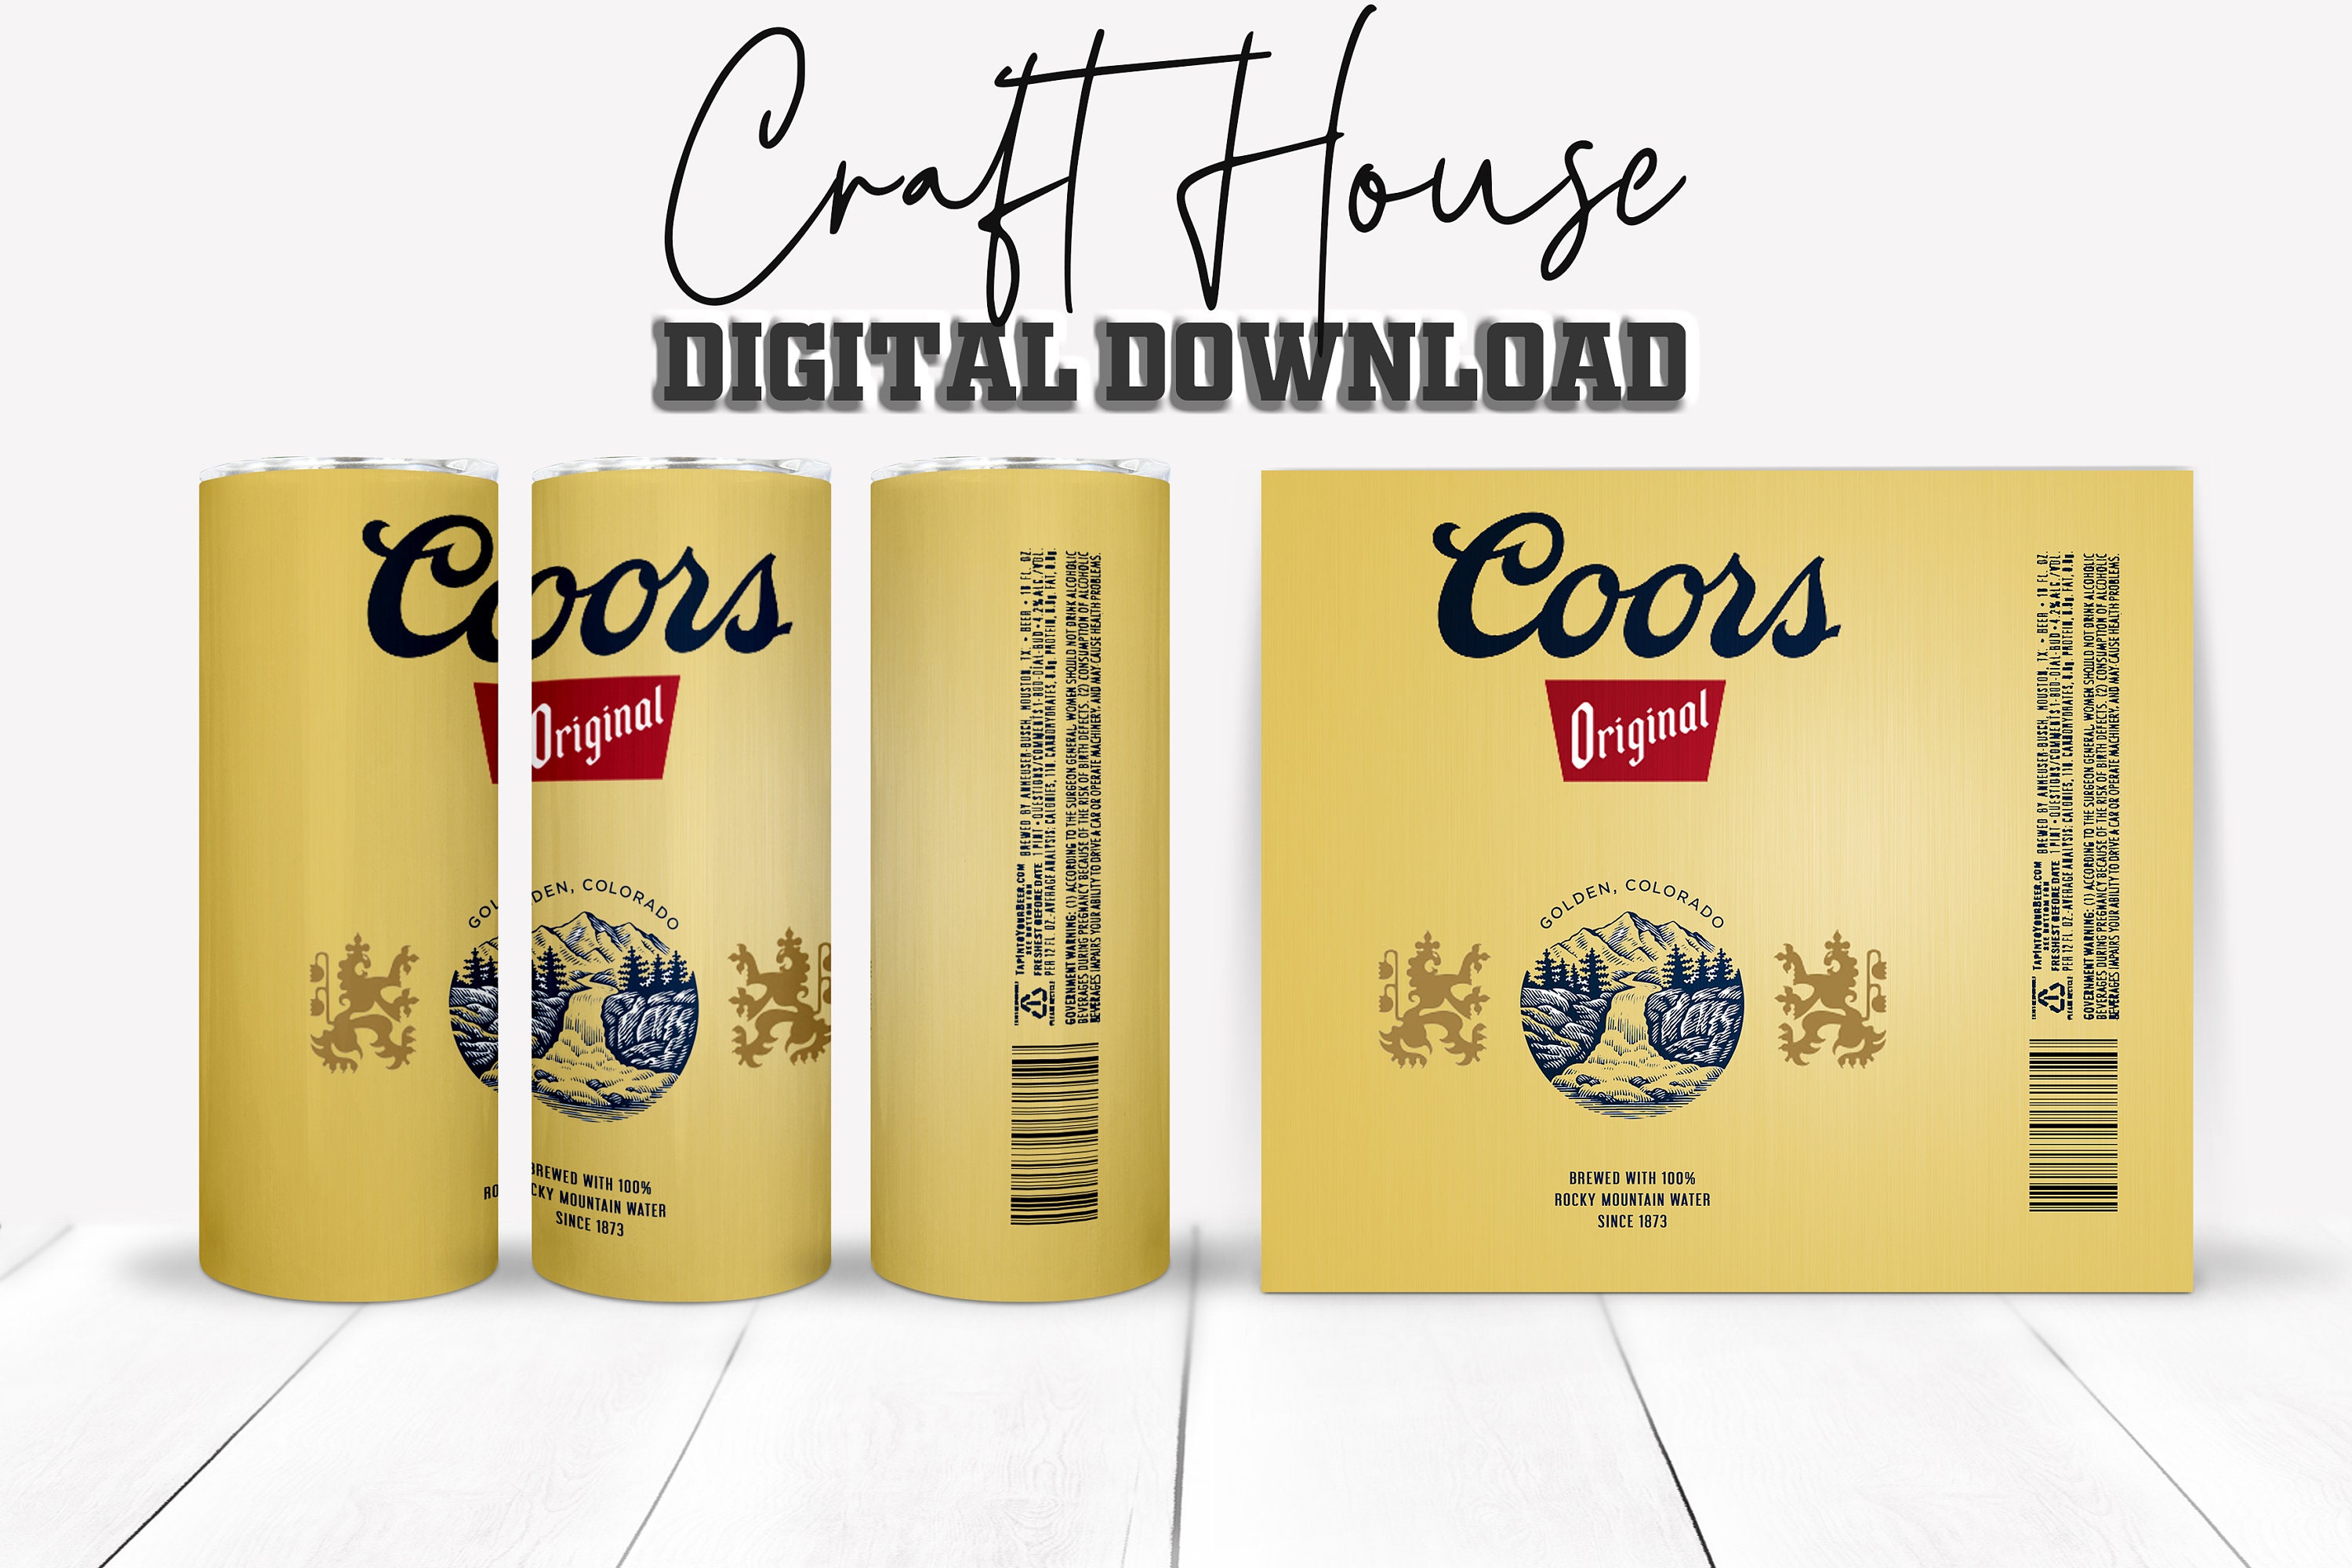 AHROOoo Beverage Wrap – Coors Light Shop